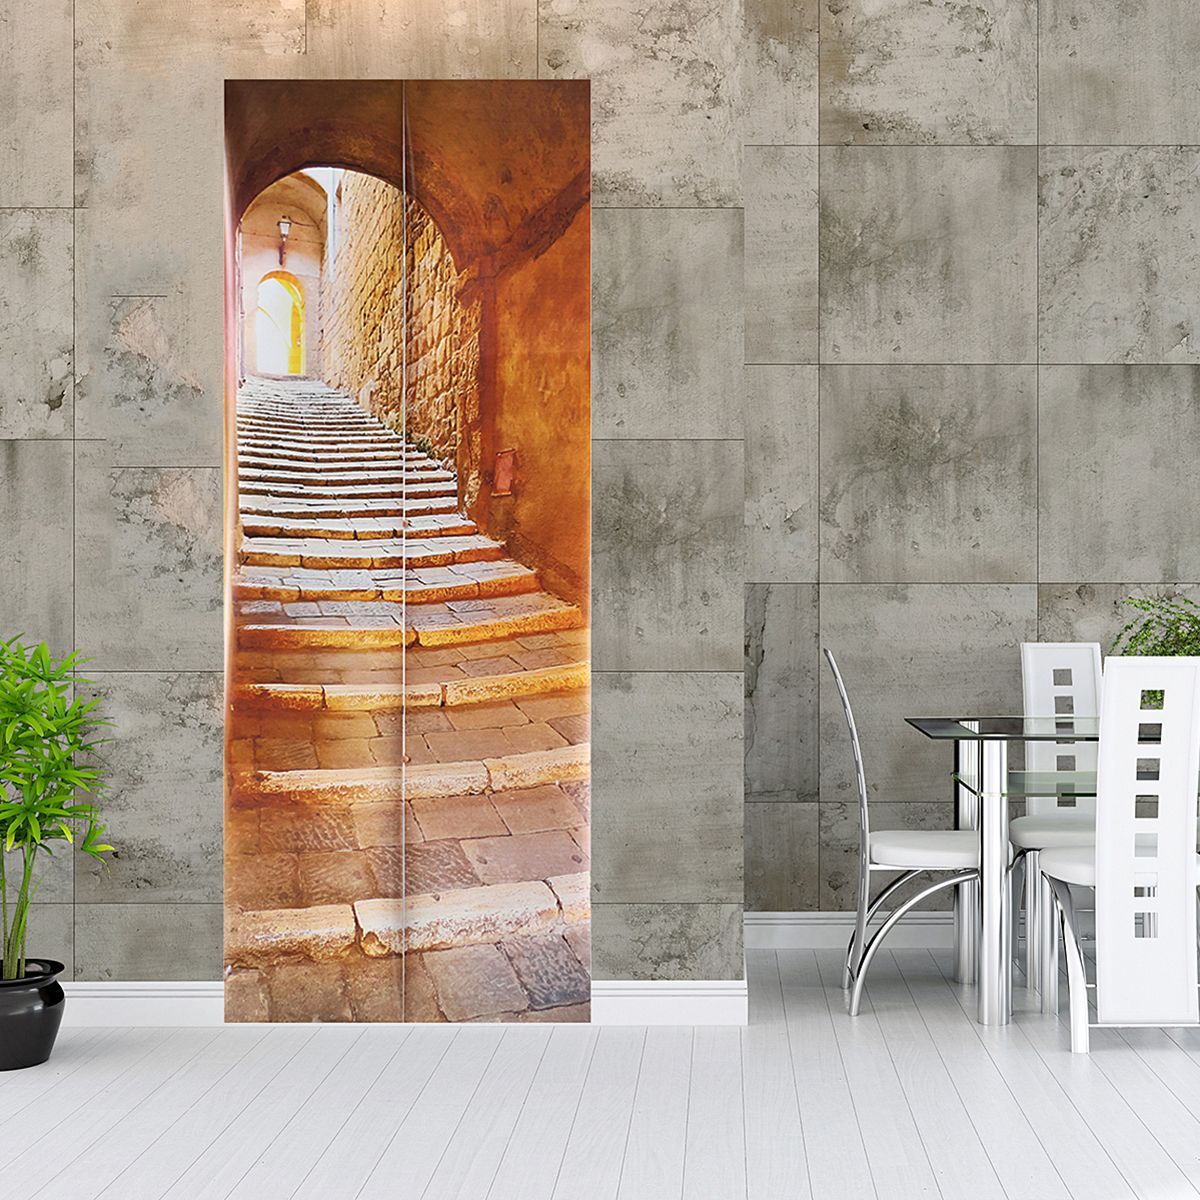 3D-Stone-Stair-Art-Door-Wall-Fridge-Sticker-Decal-Self-Adhesive-Mural-Home-Office-Decor-1369449